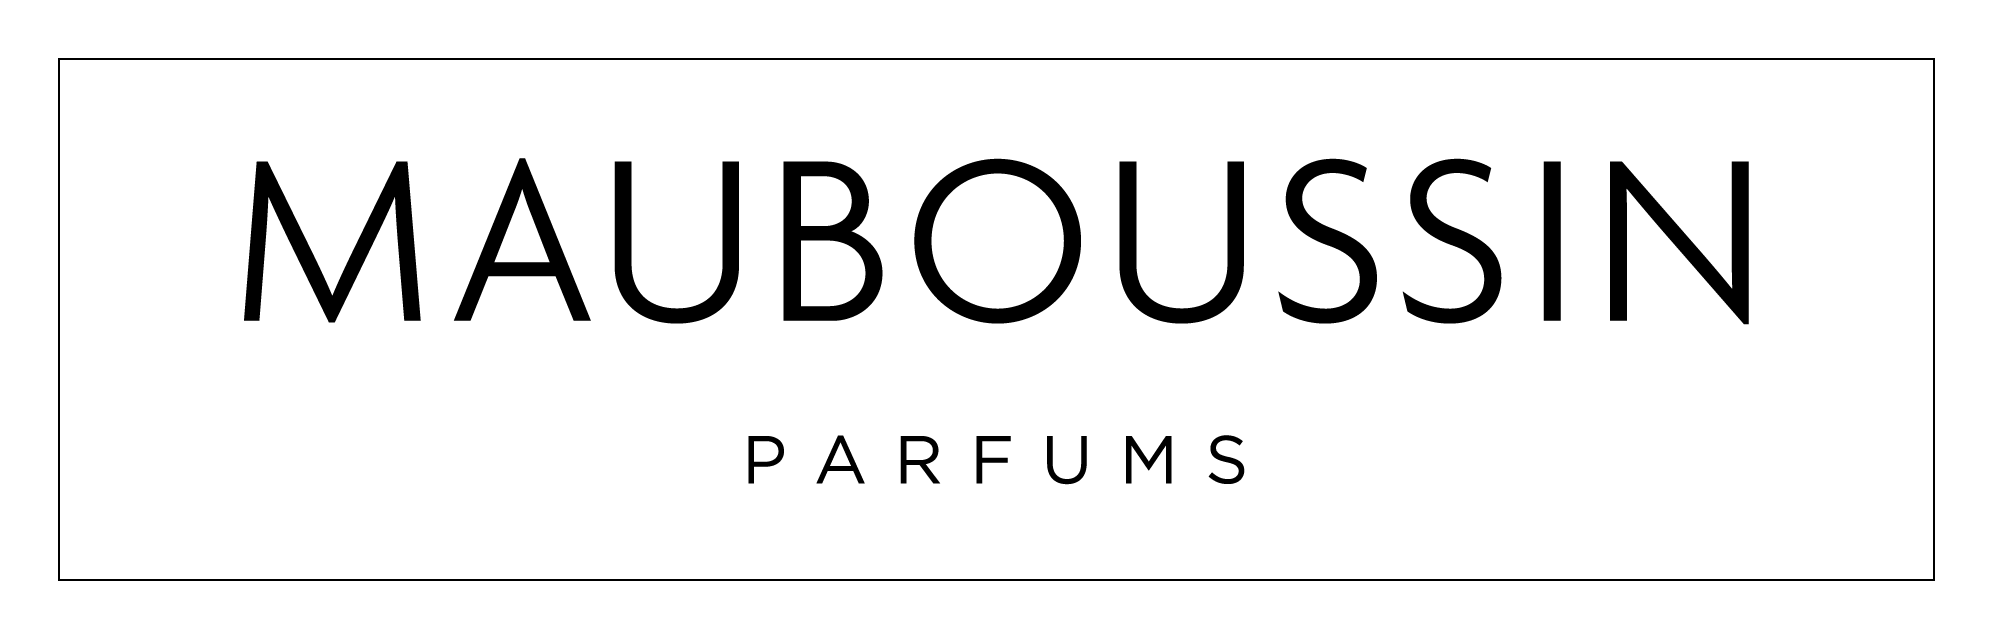 Mauboussin Logo - Mauboussin parfums - Lorience Paris